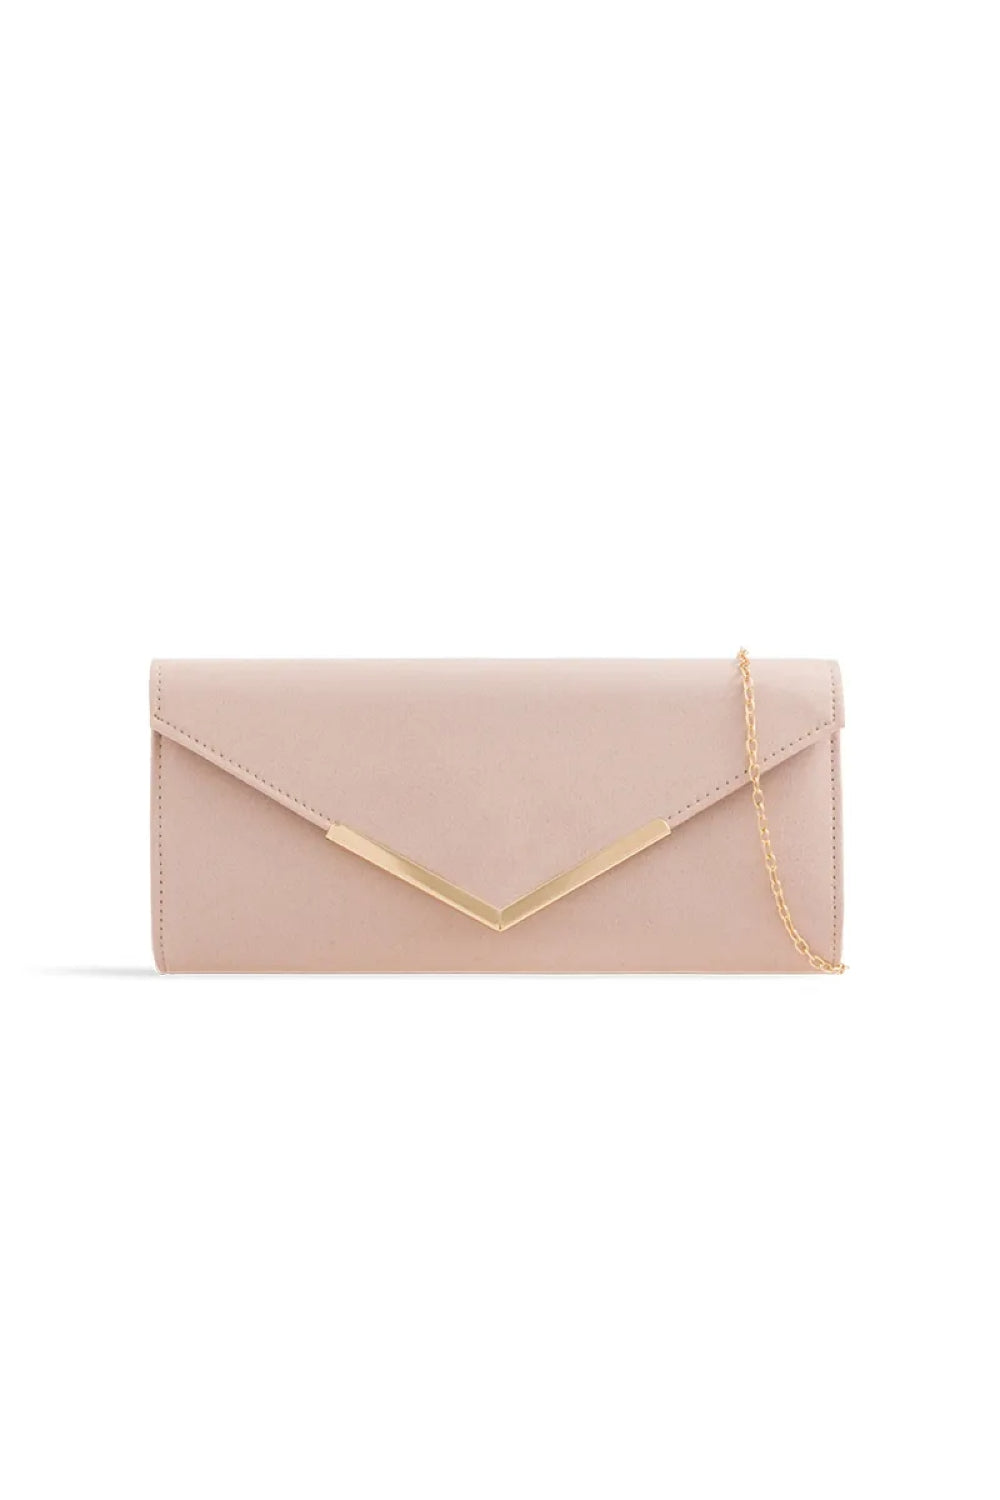 Nude Suede Envelope Clutch Bag ALL2435